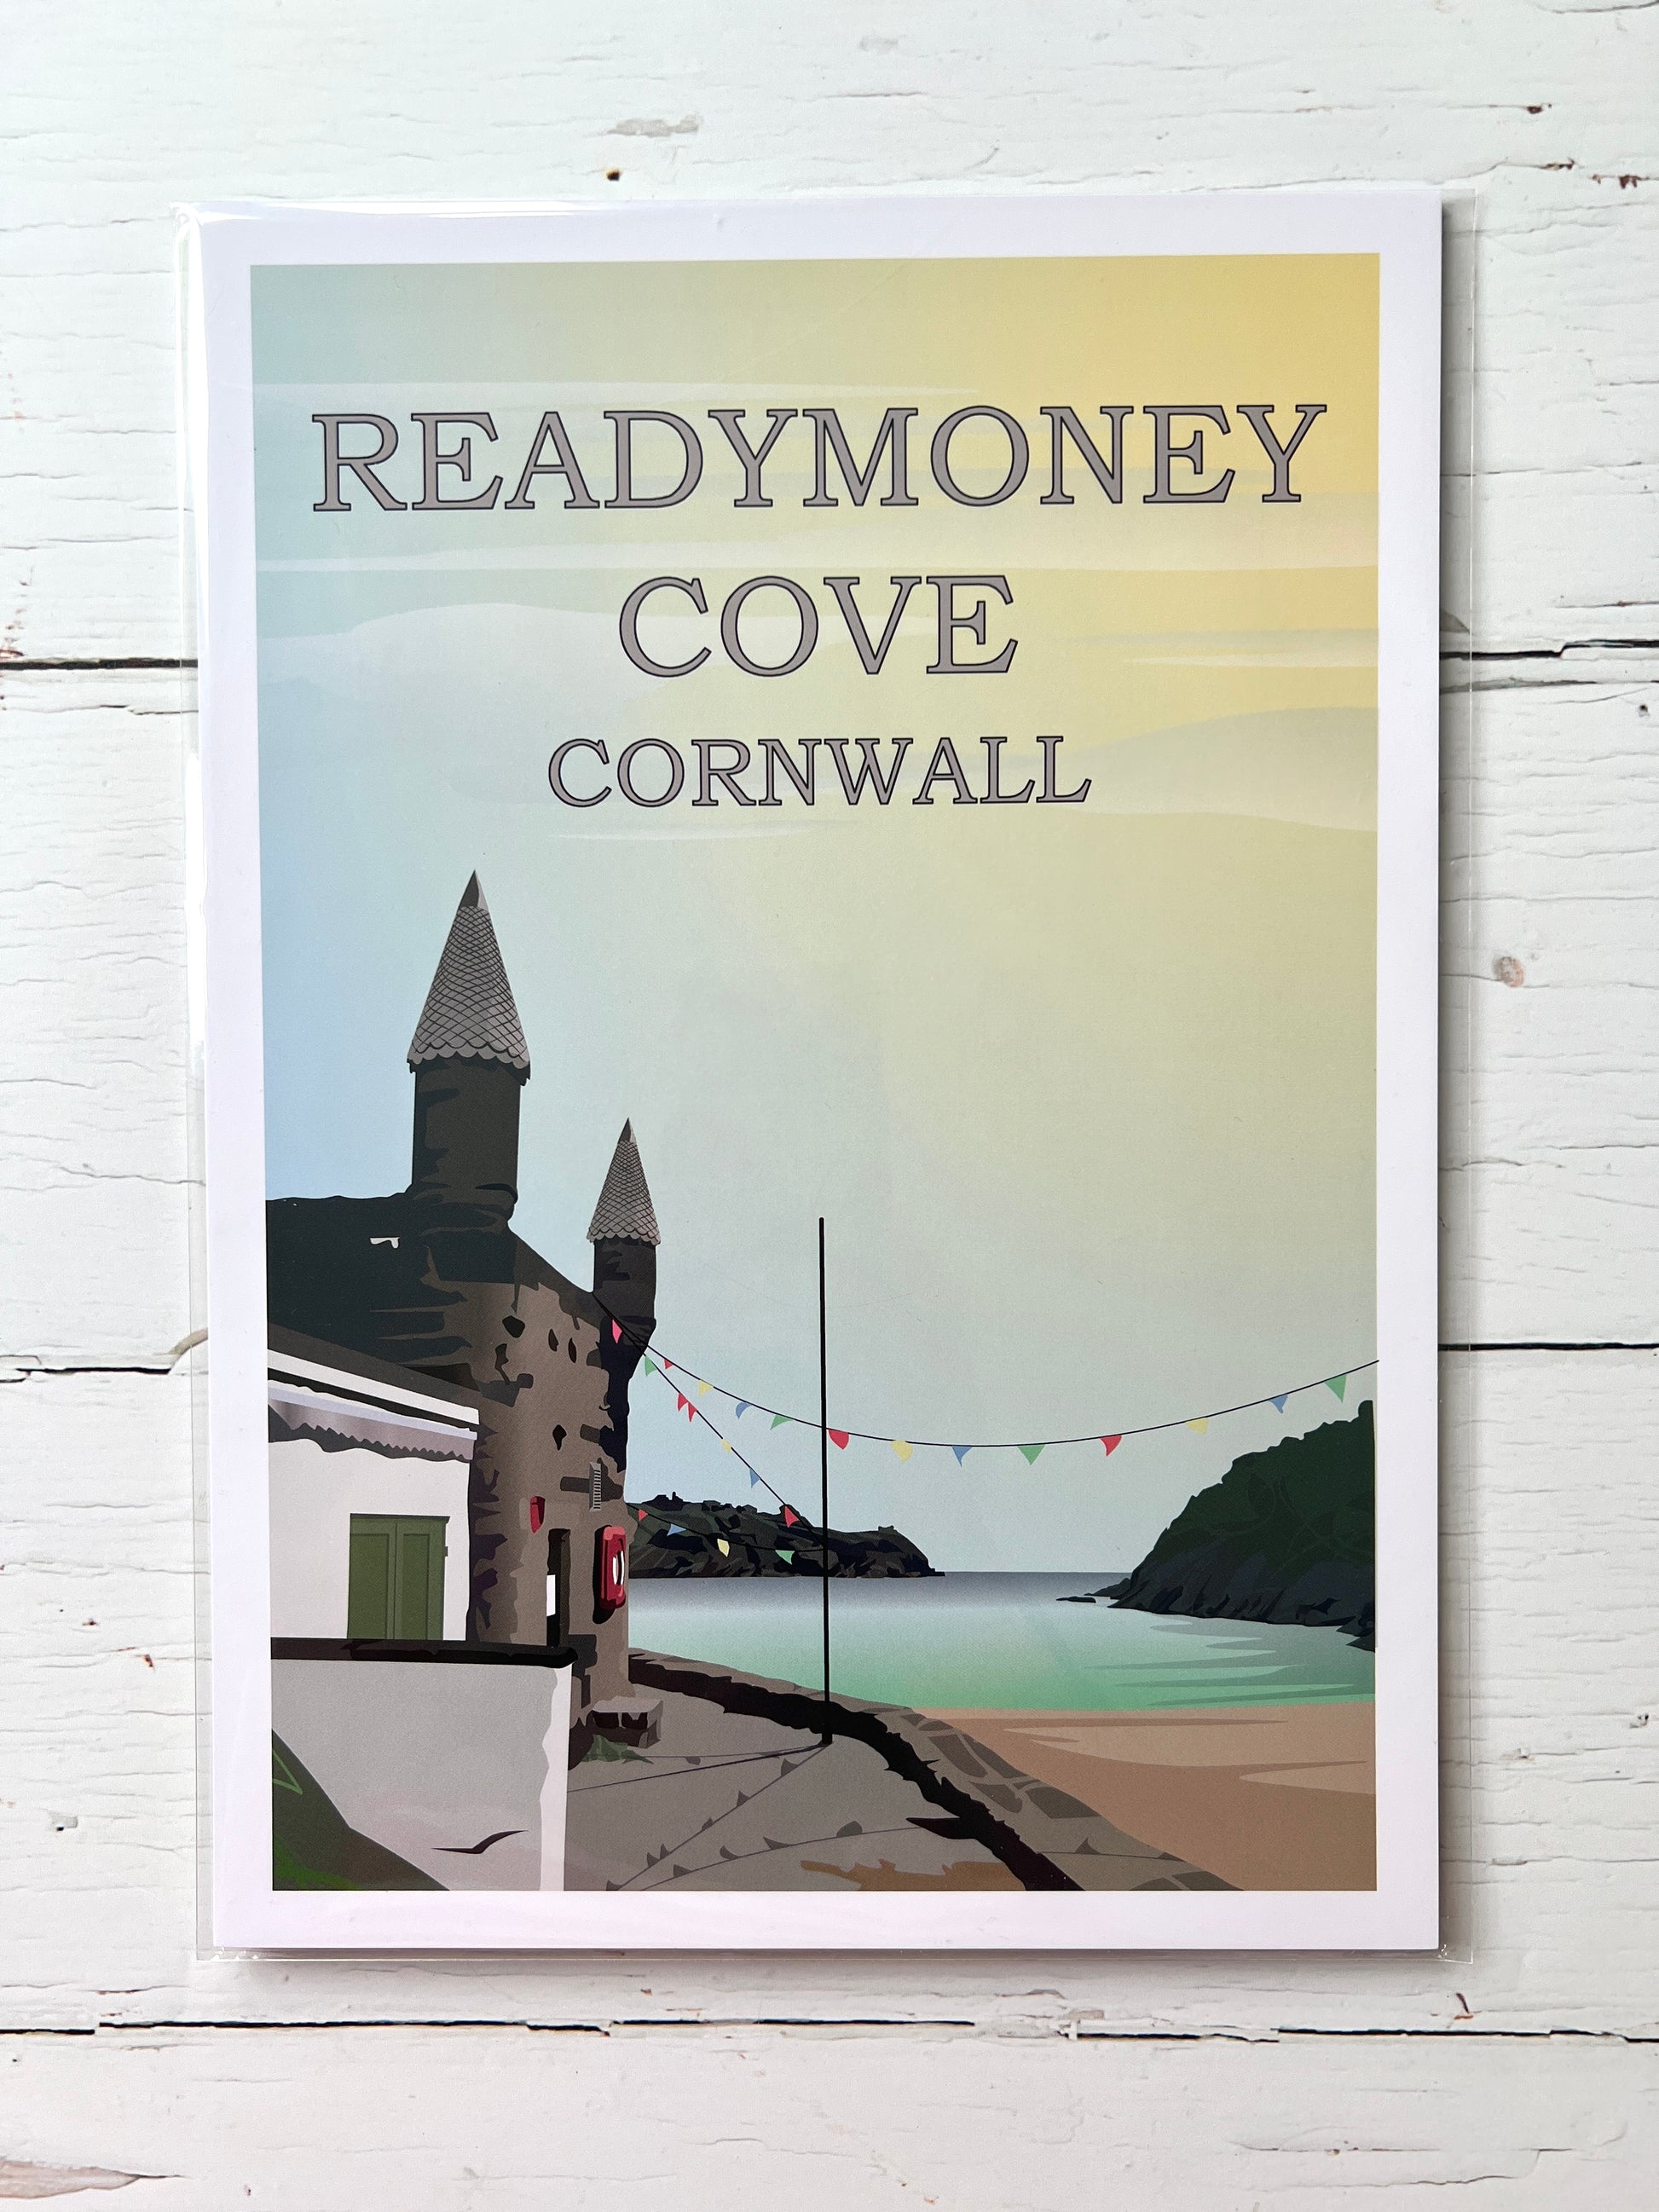 Readymoney Cove Digital Art Prints in A4 